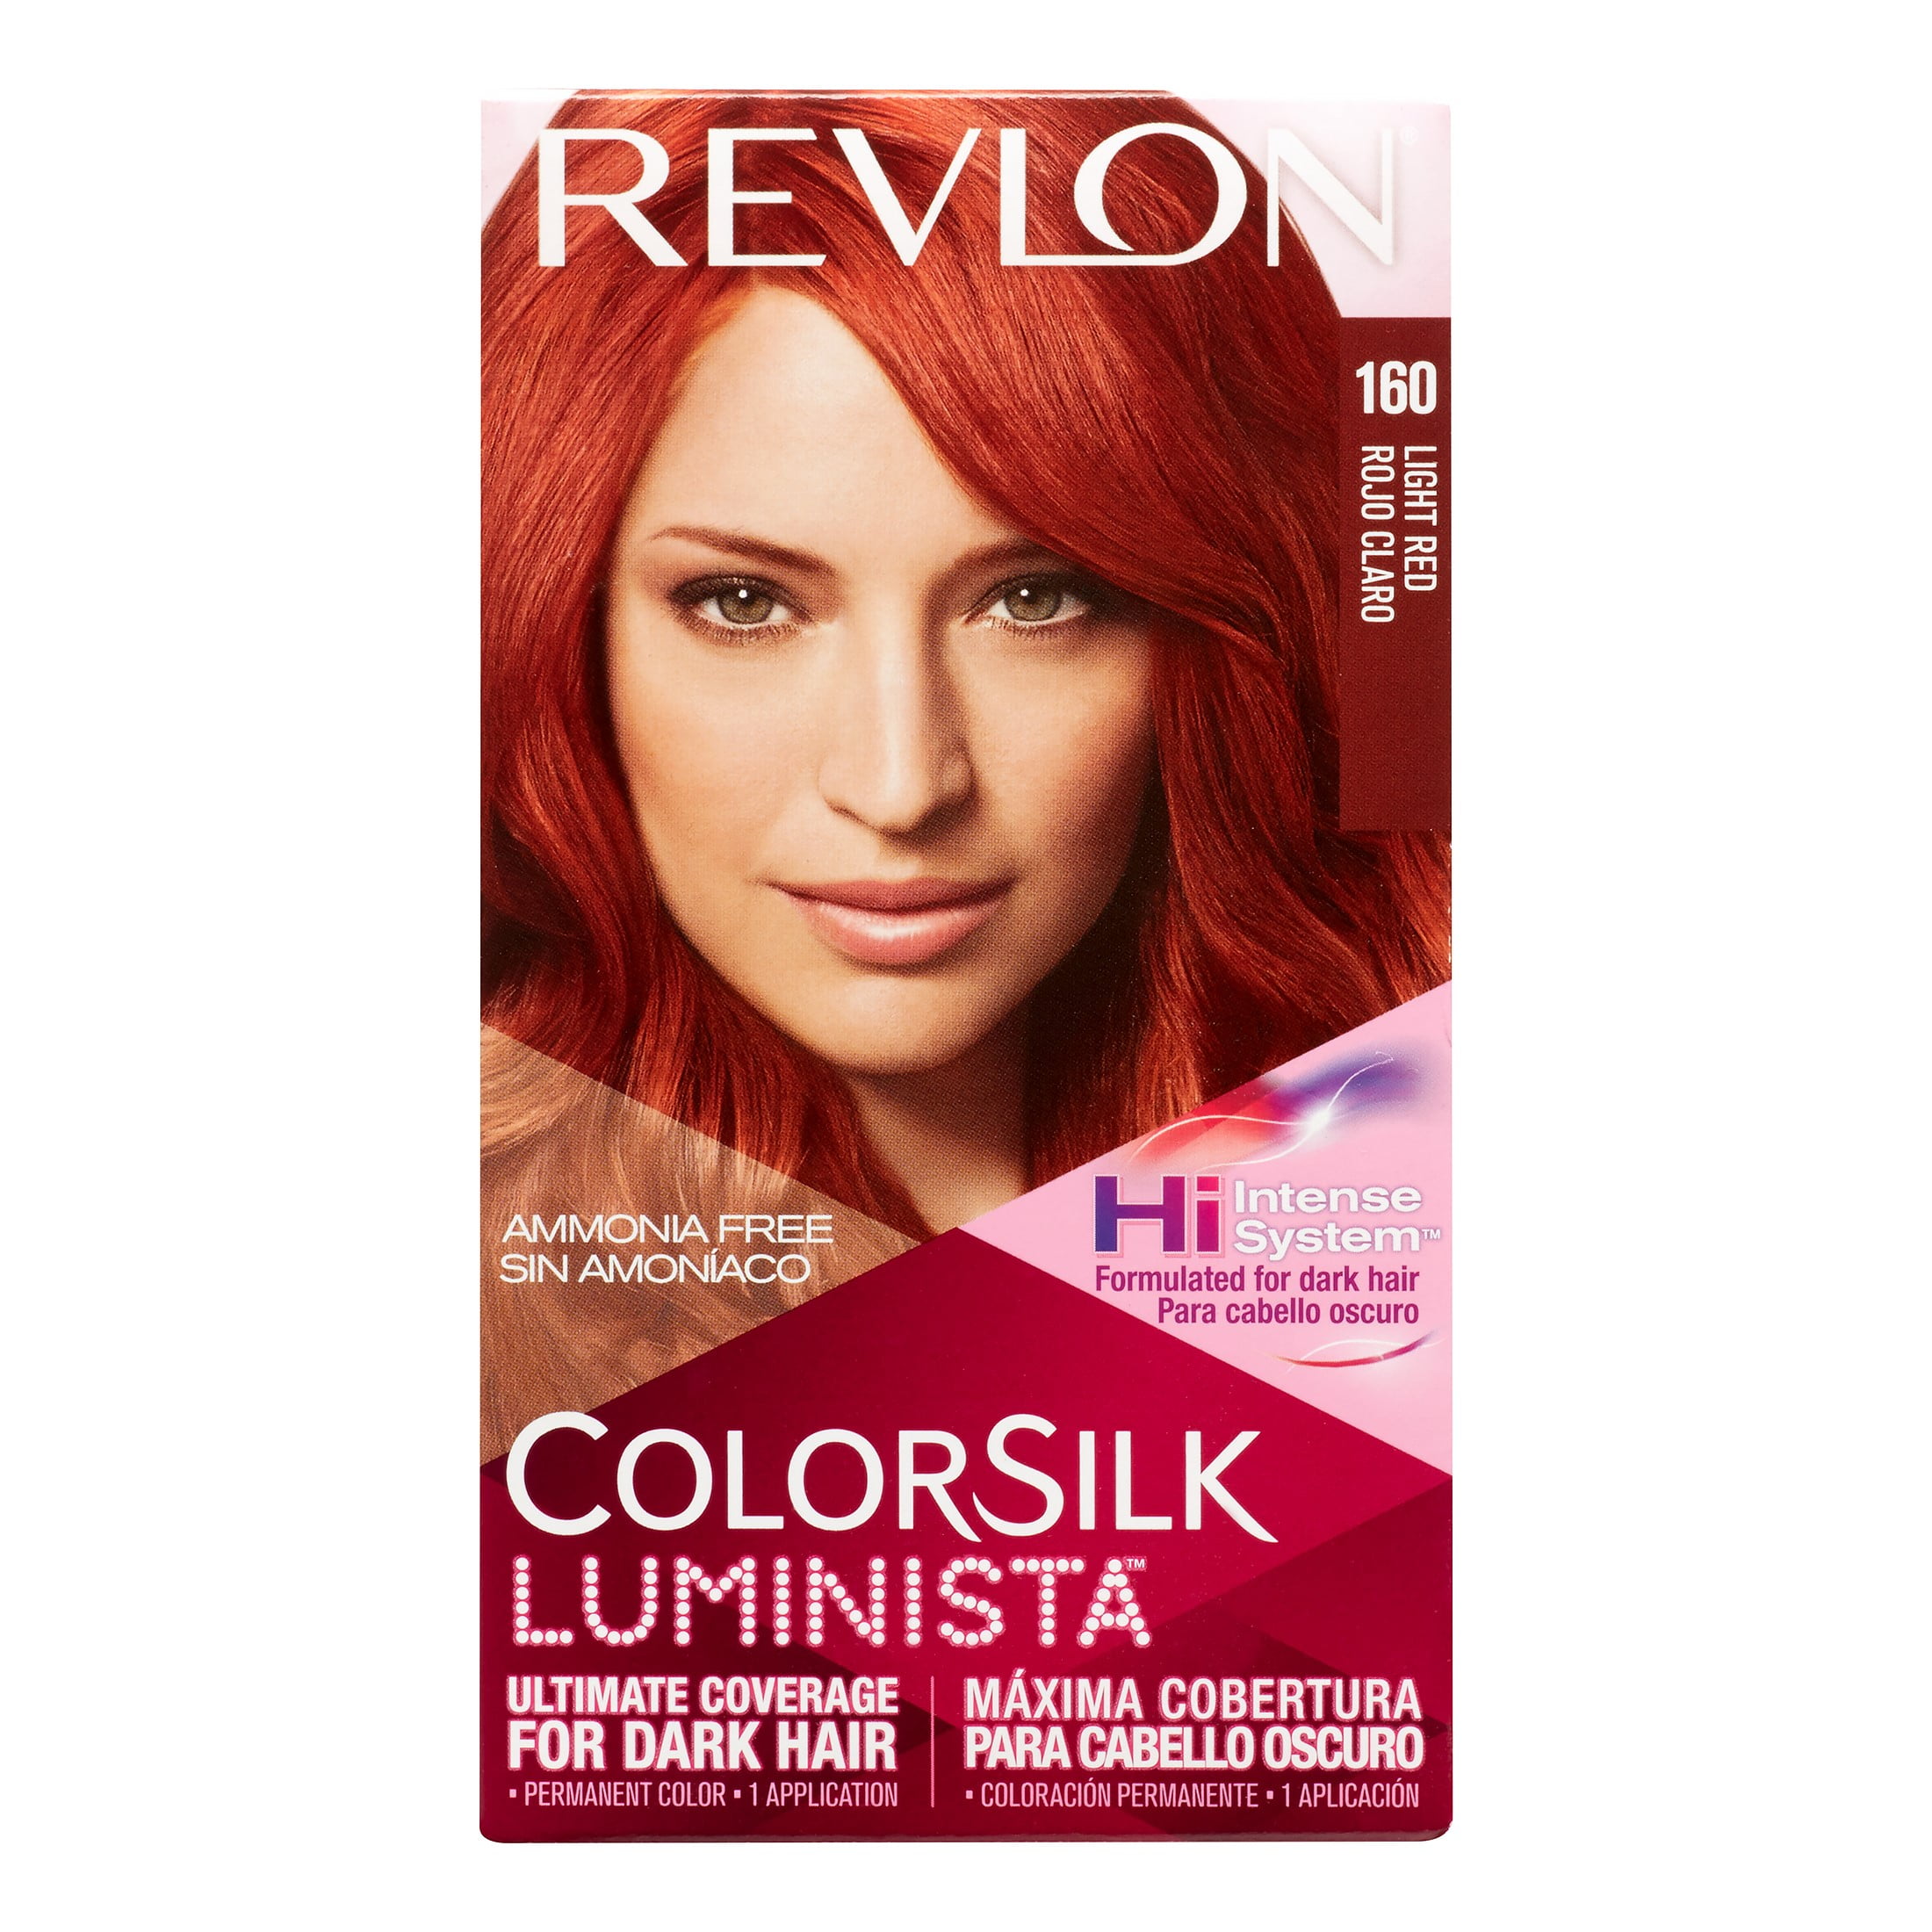 Revlon Colorsilk Luminista Hair Color Light Red